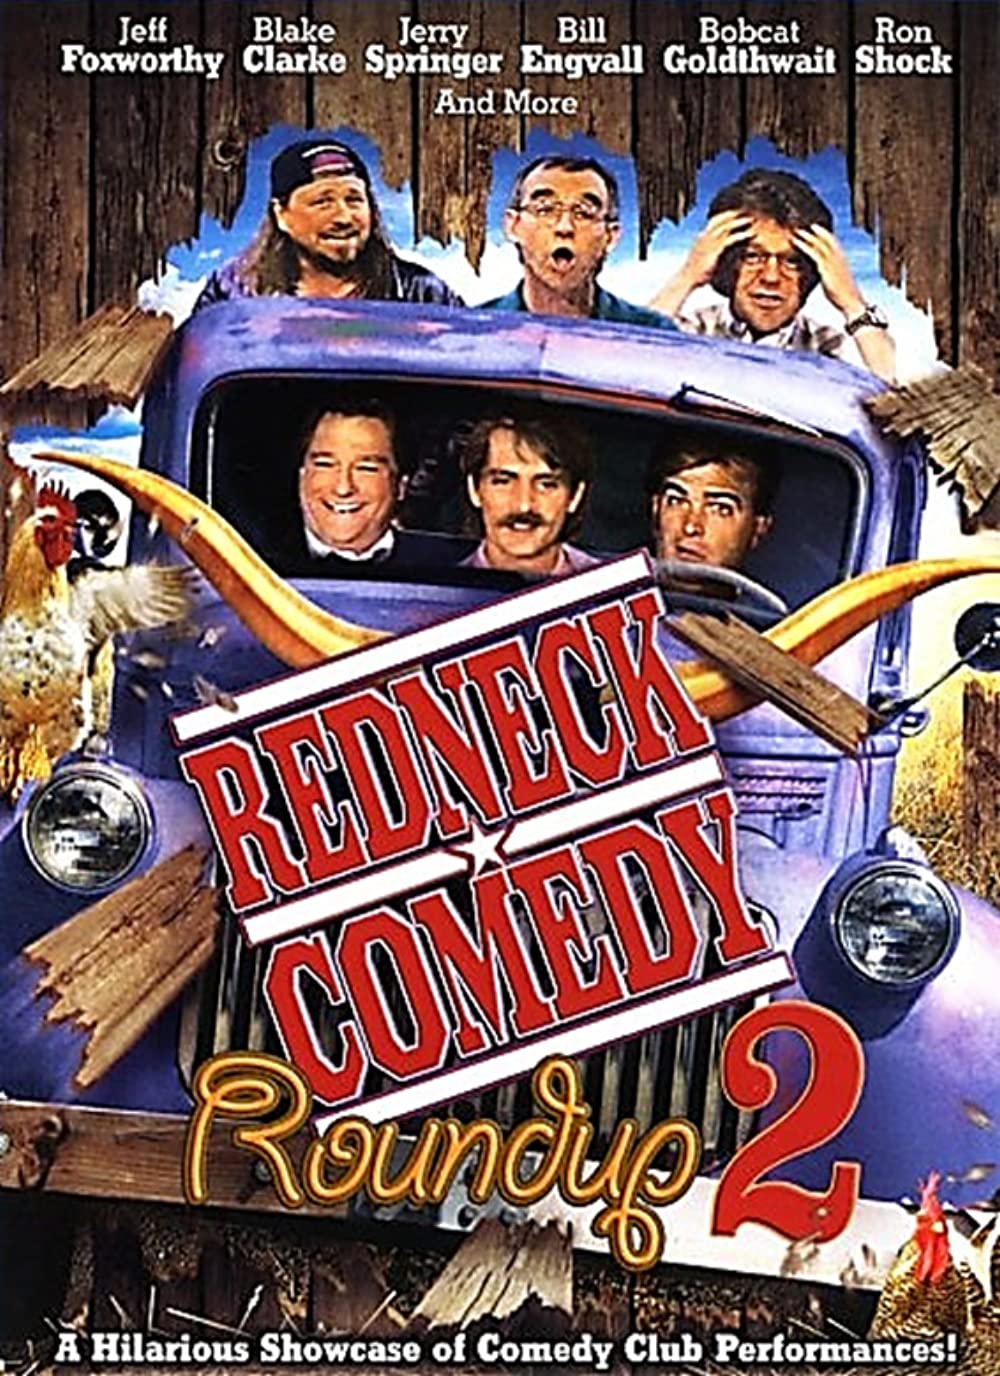 Redneck Comedy Roundup 2 Movie Download - Redneck Comedy Roundup 2 Review